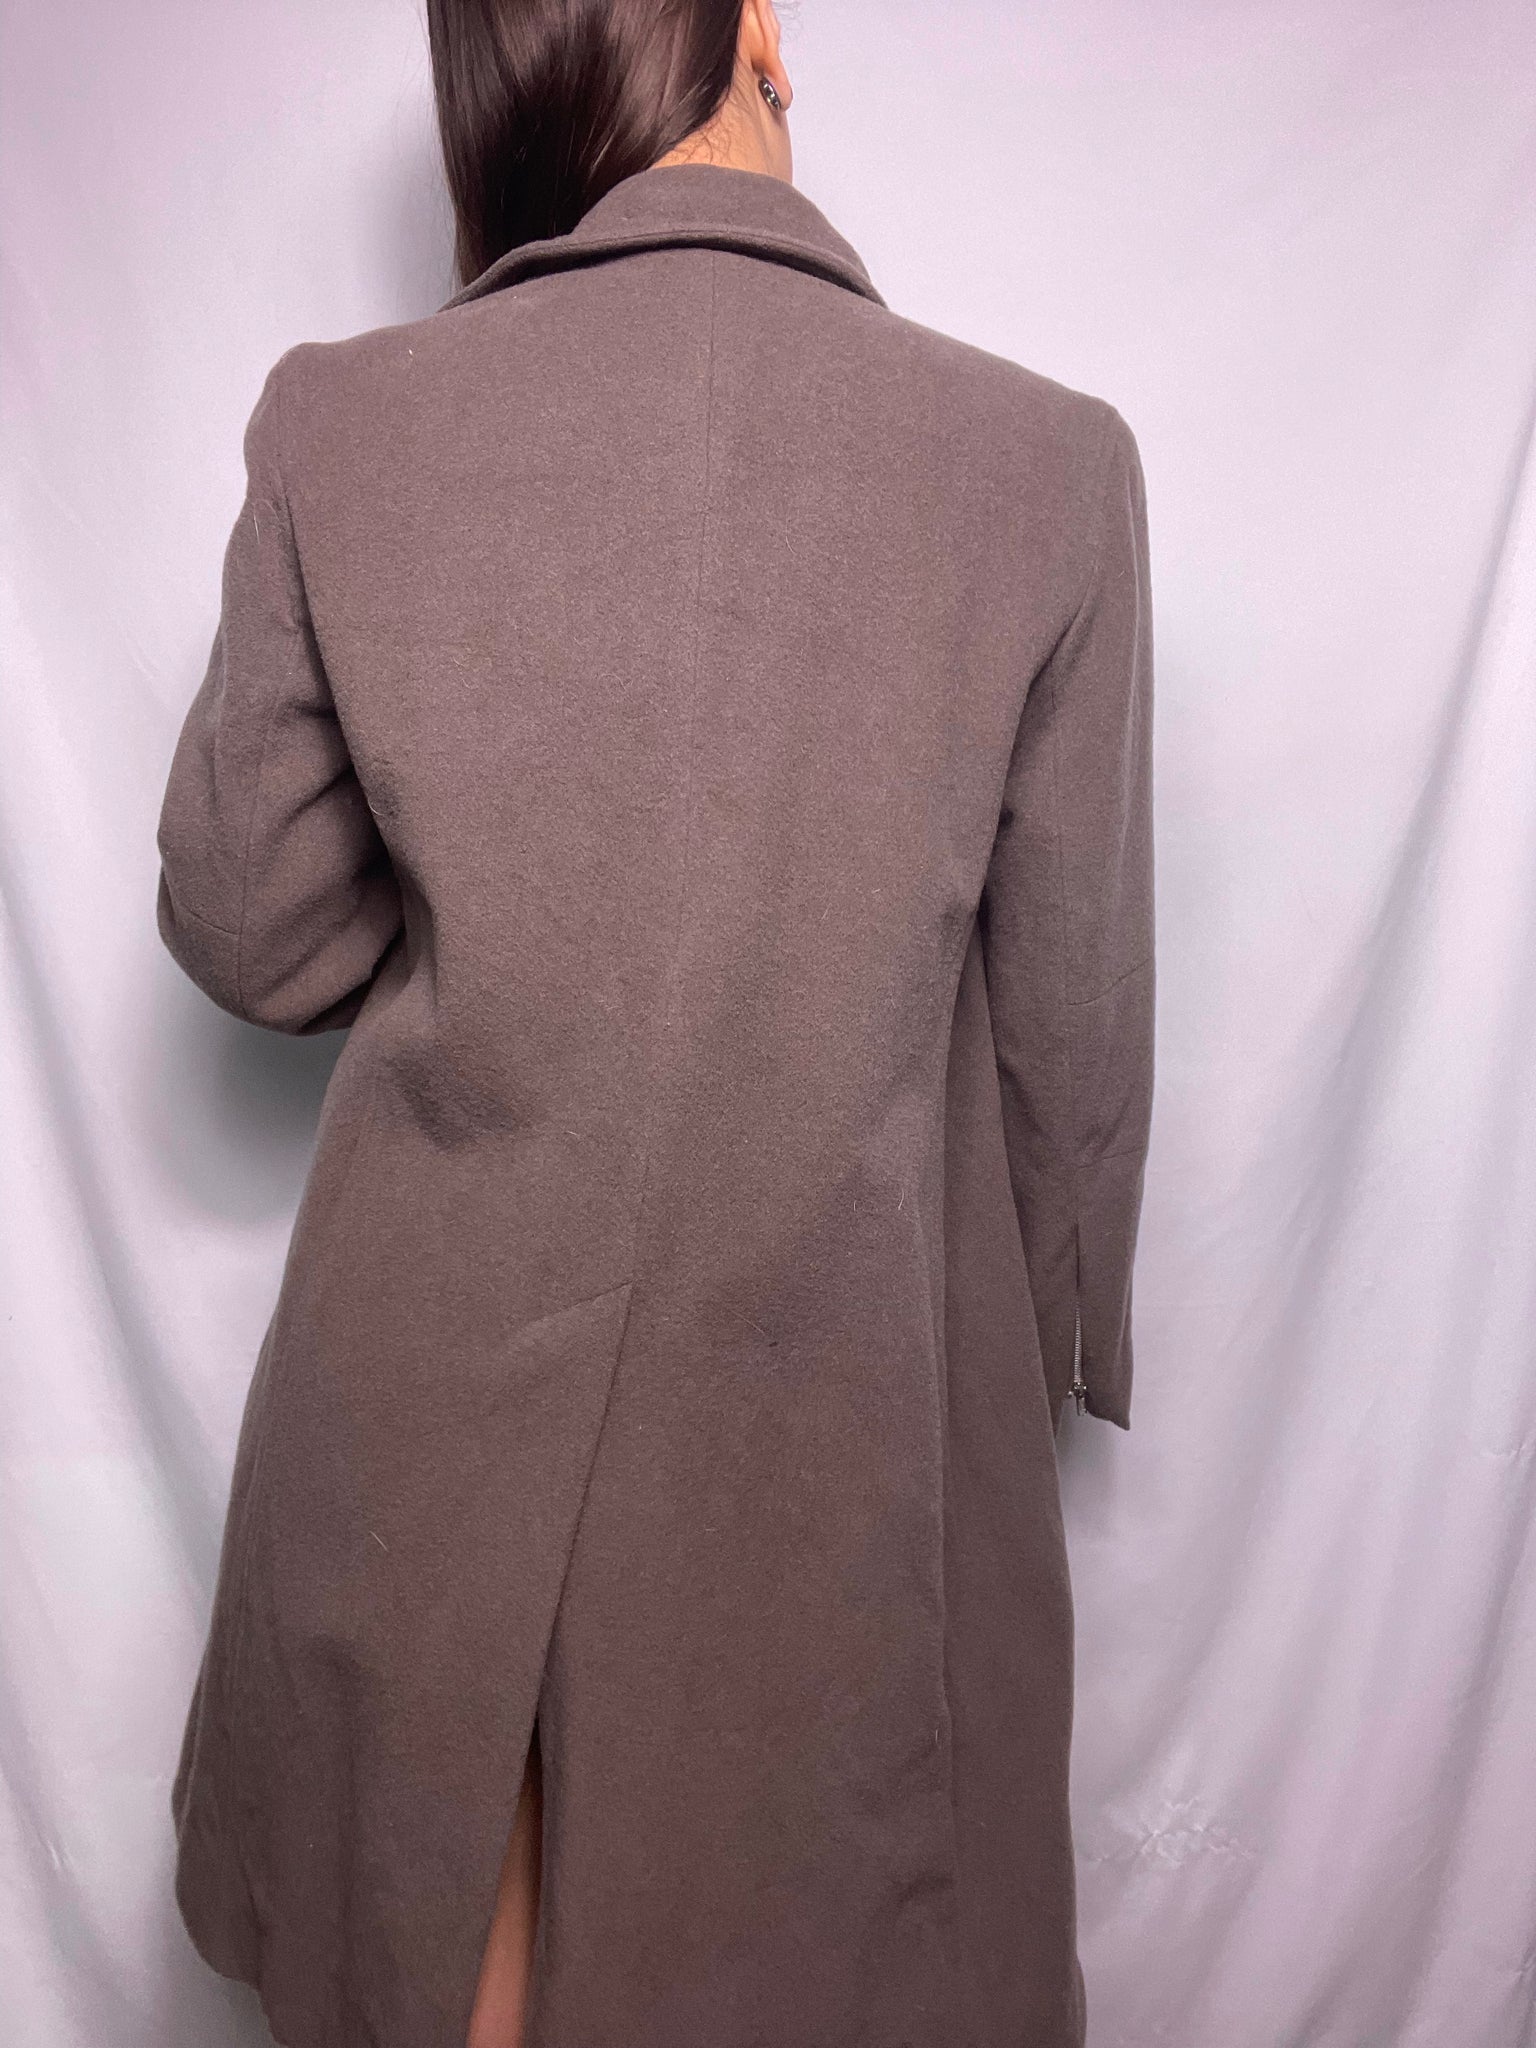 Vintage 80s wool coat, Size 12